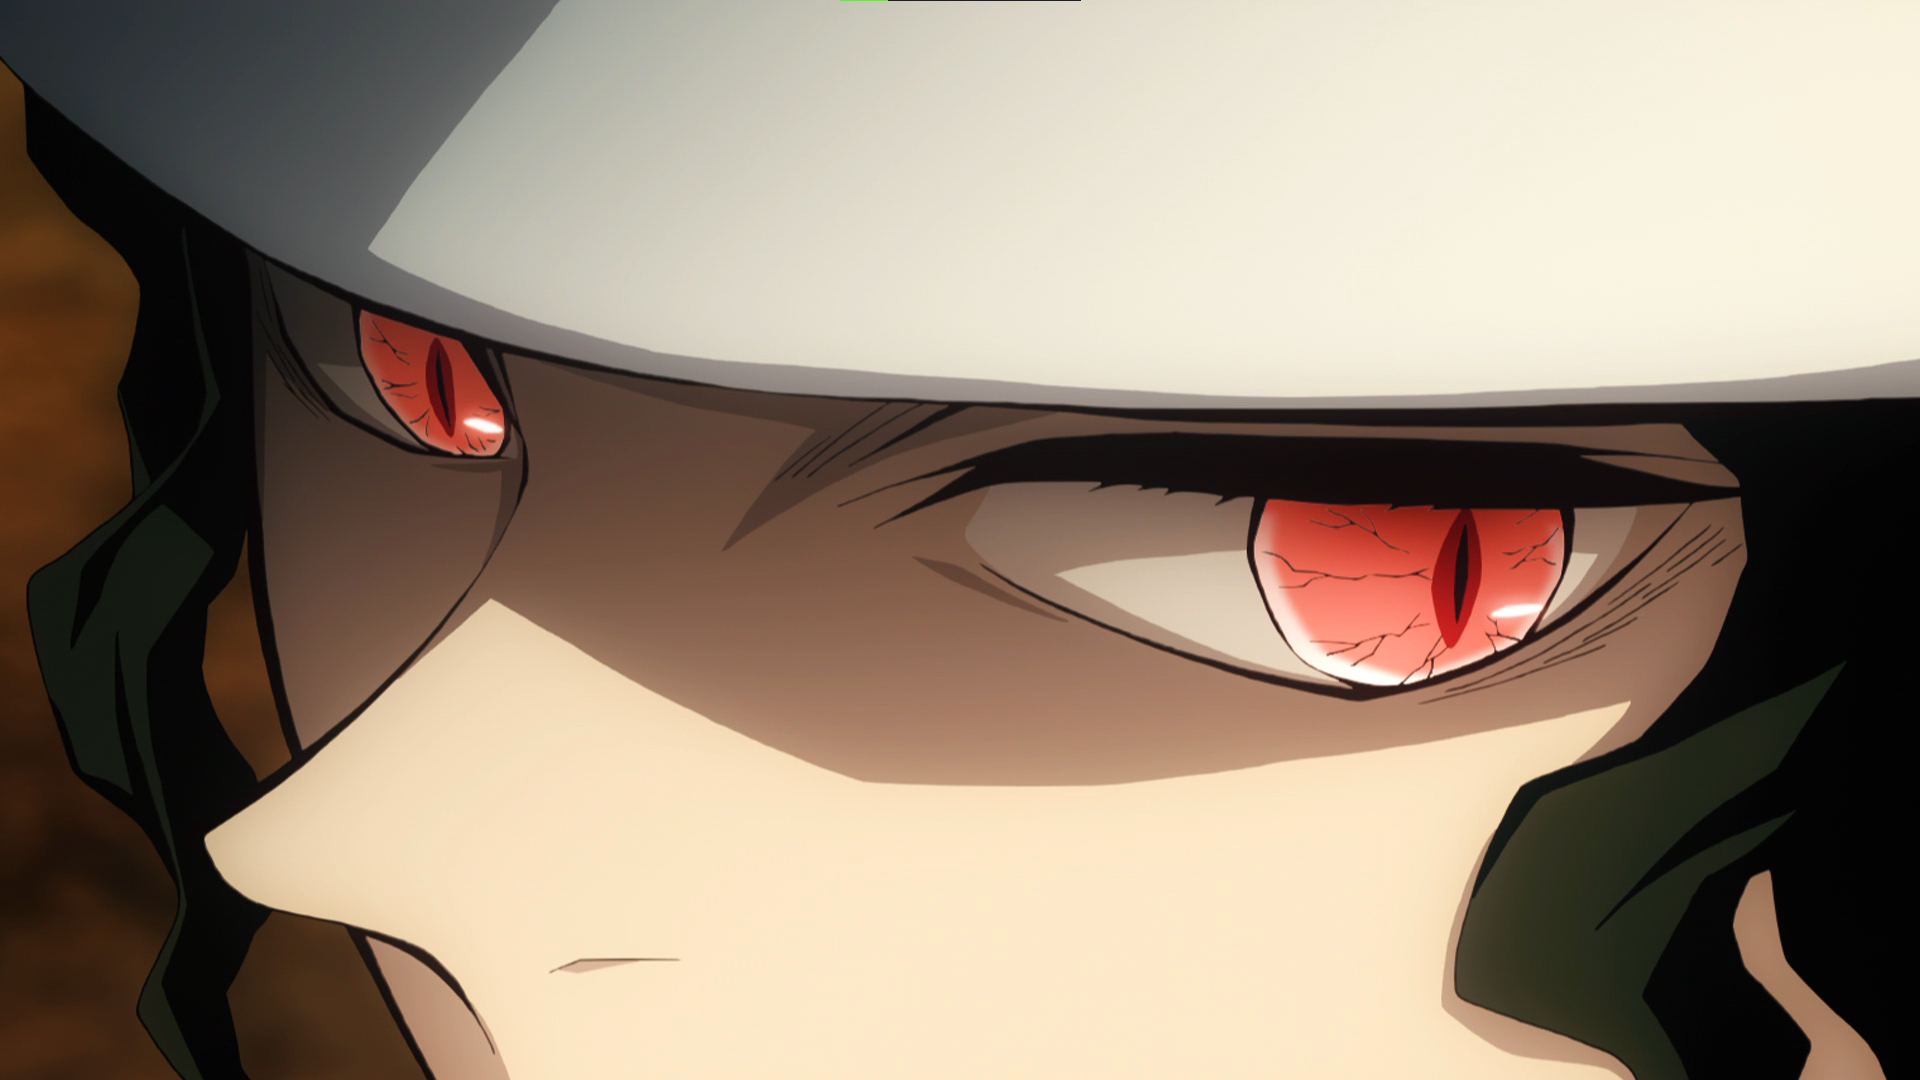 Anime 1920x1080 Kimetsu no Yaiba anime Anime screenshot anime boys glowing eyes Muzan Kibutsuji angry demon closeup